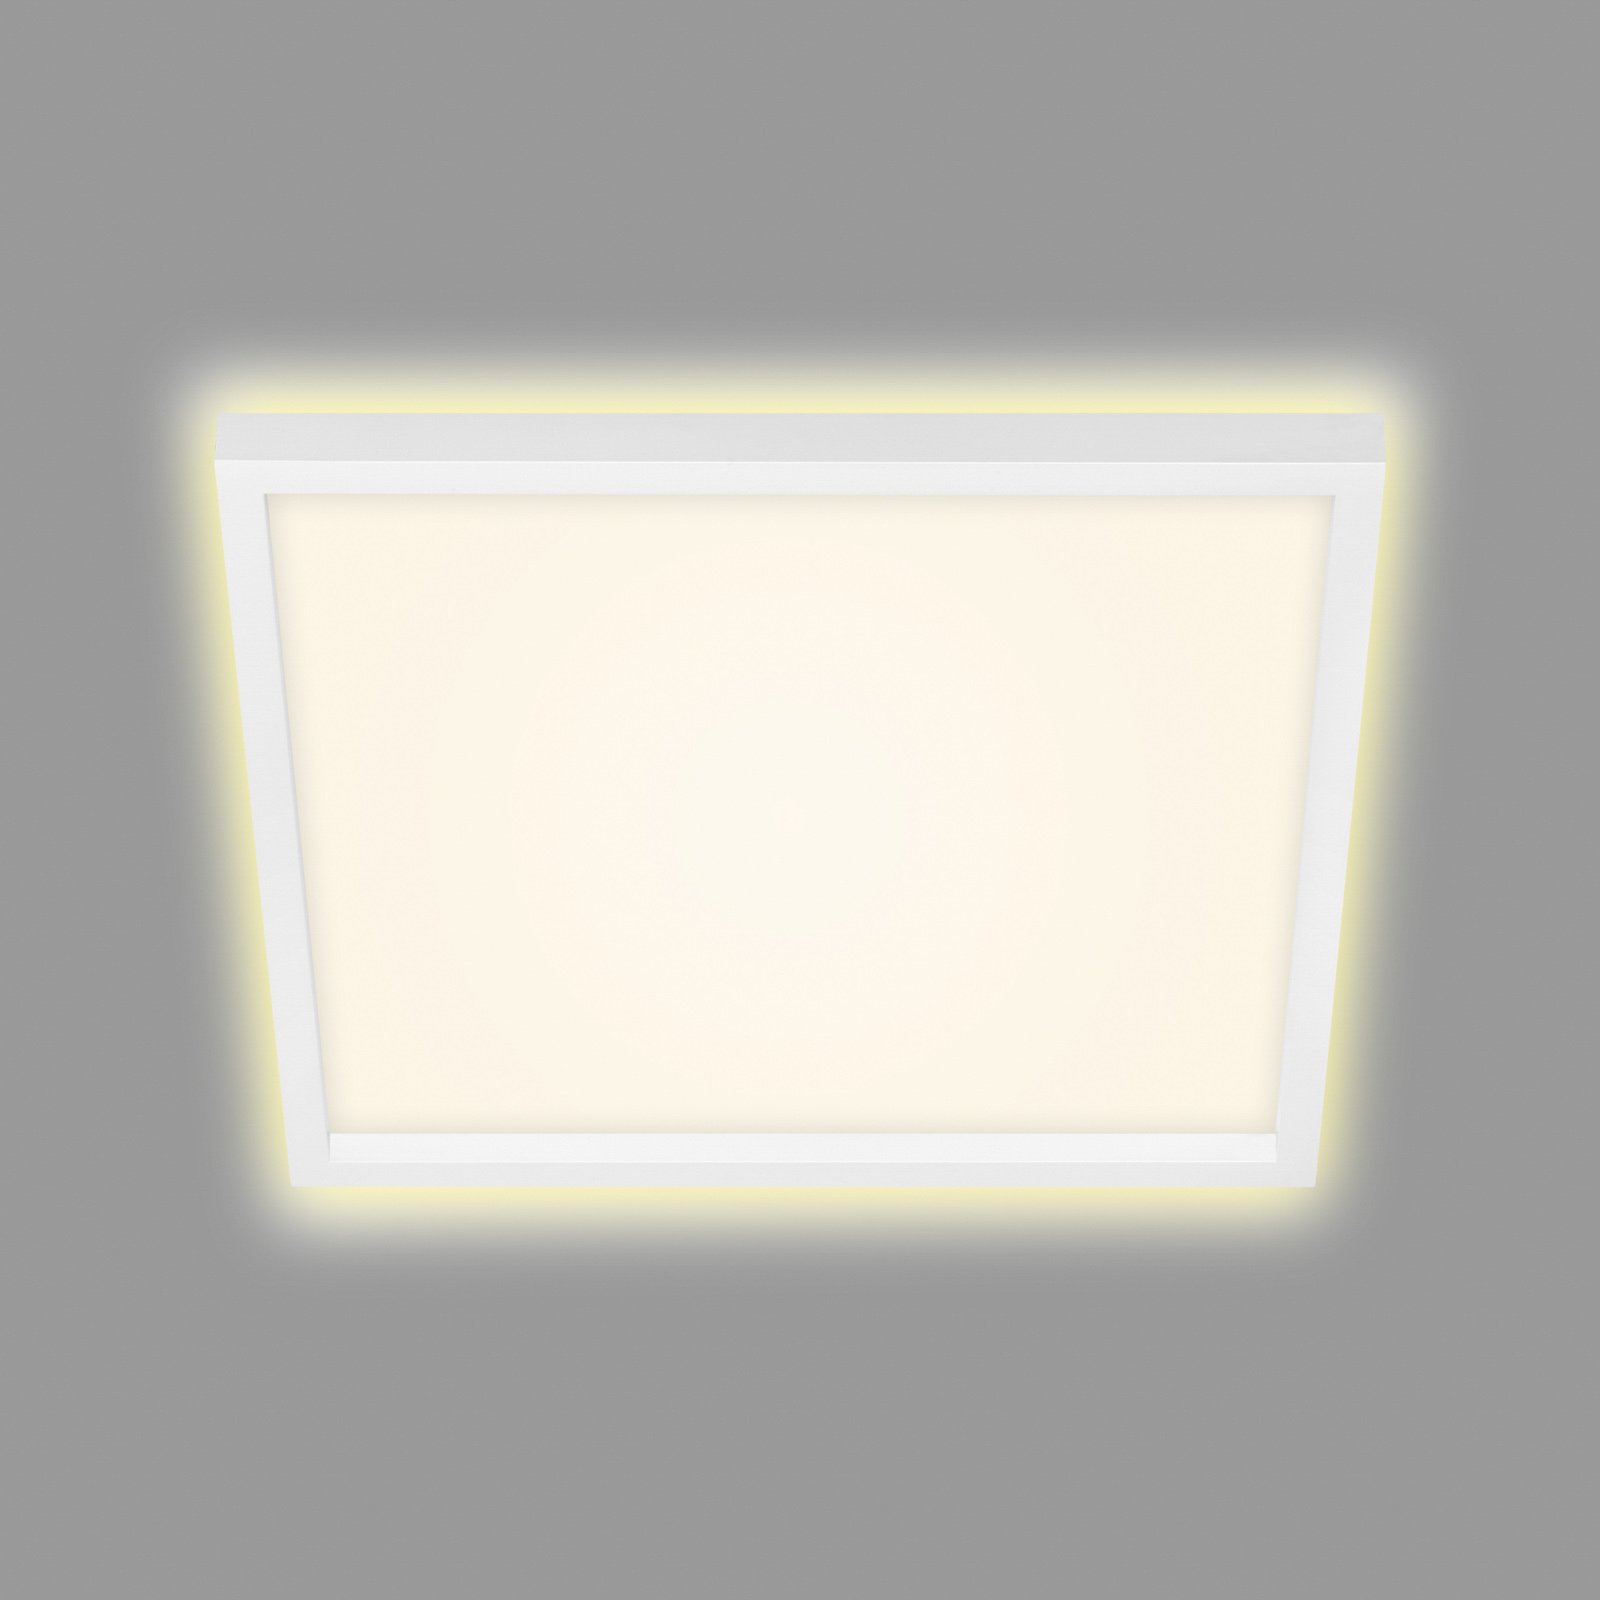 LED plafondlamp 7364, 42 x 42 cm, wit